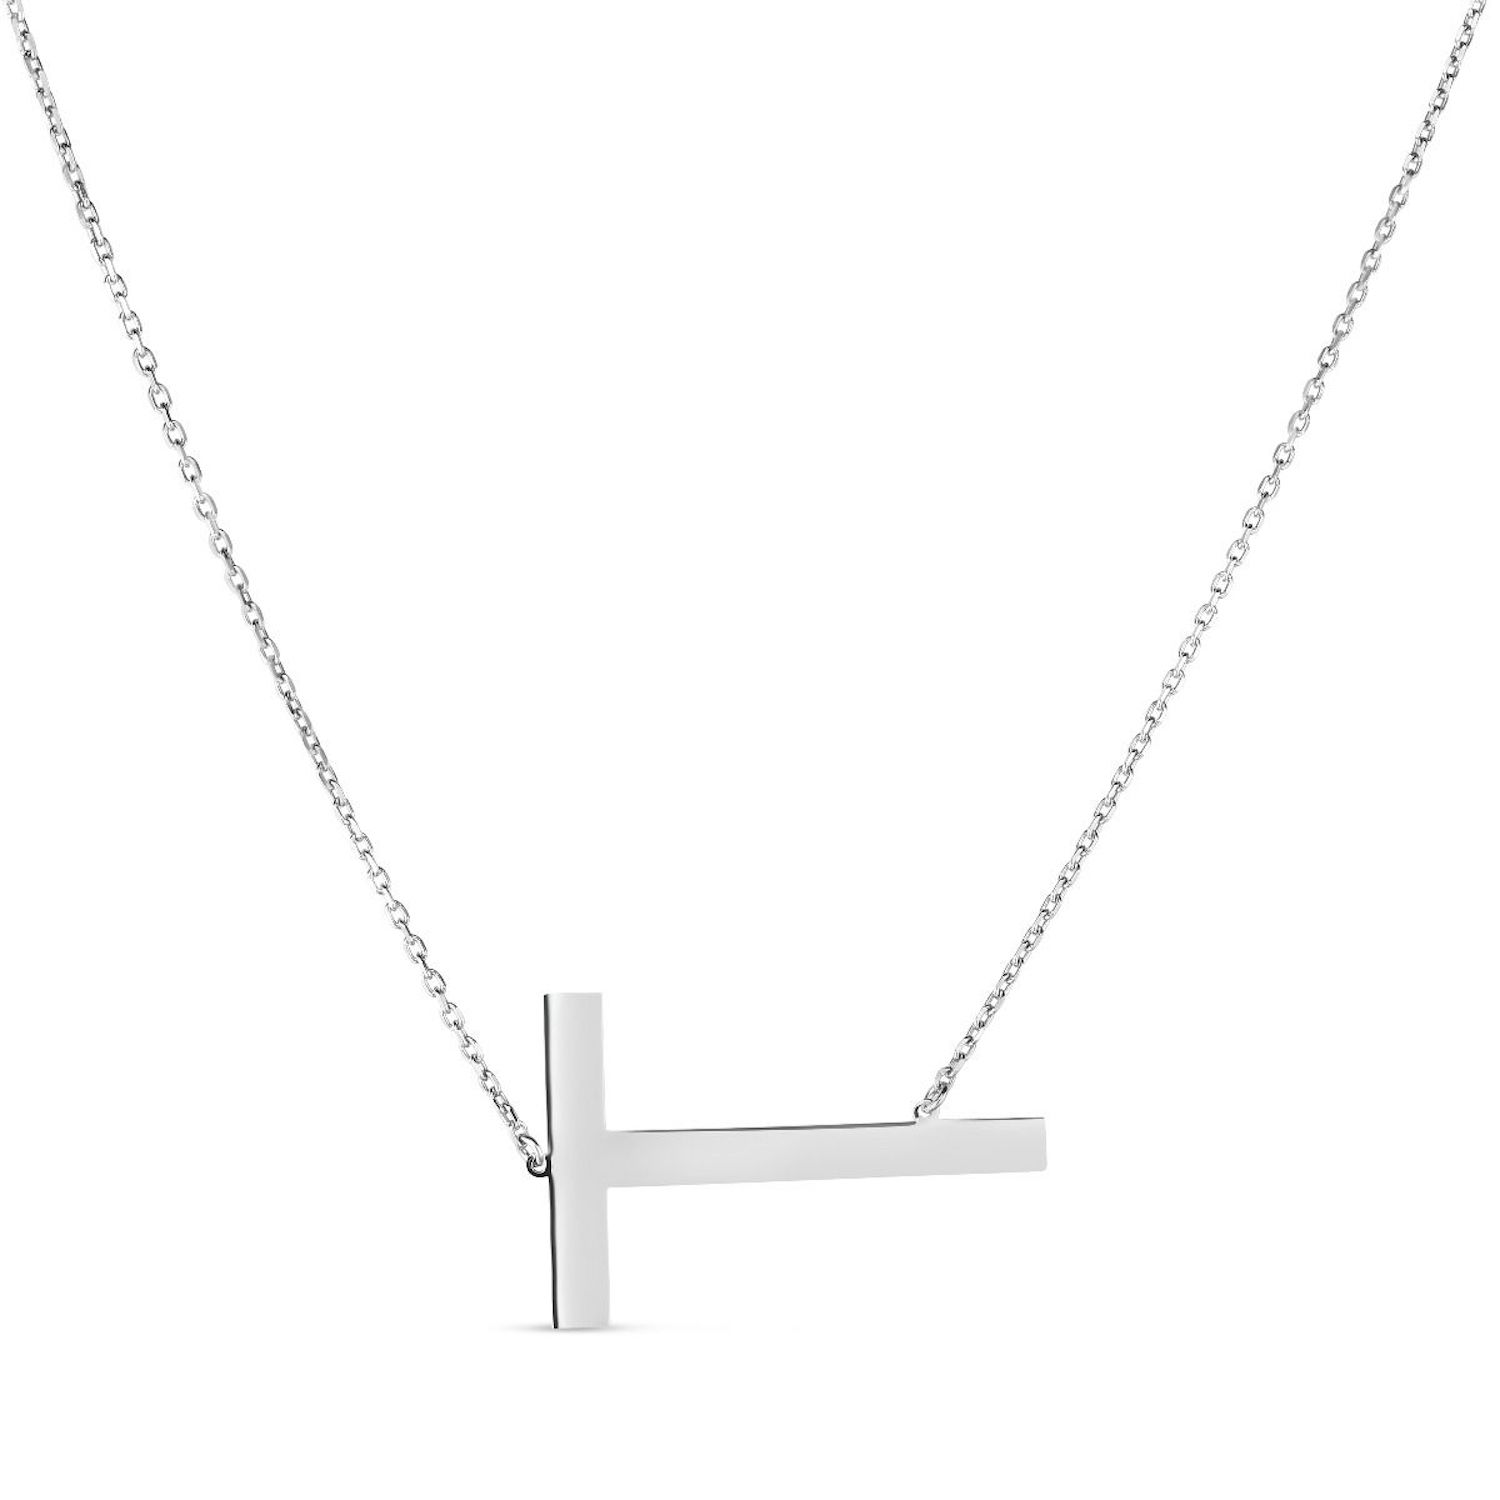 Sterling Silver Sideways Initials Letter Pendant Necklace 16"-18" Adj. 1.5" - T